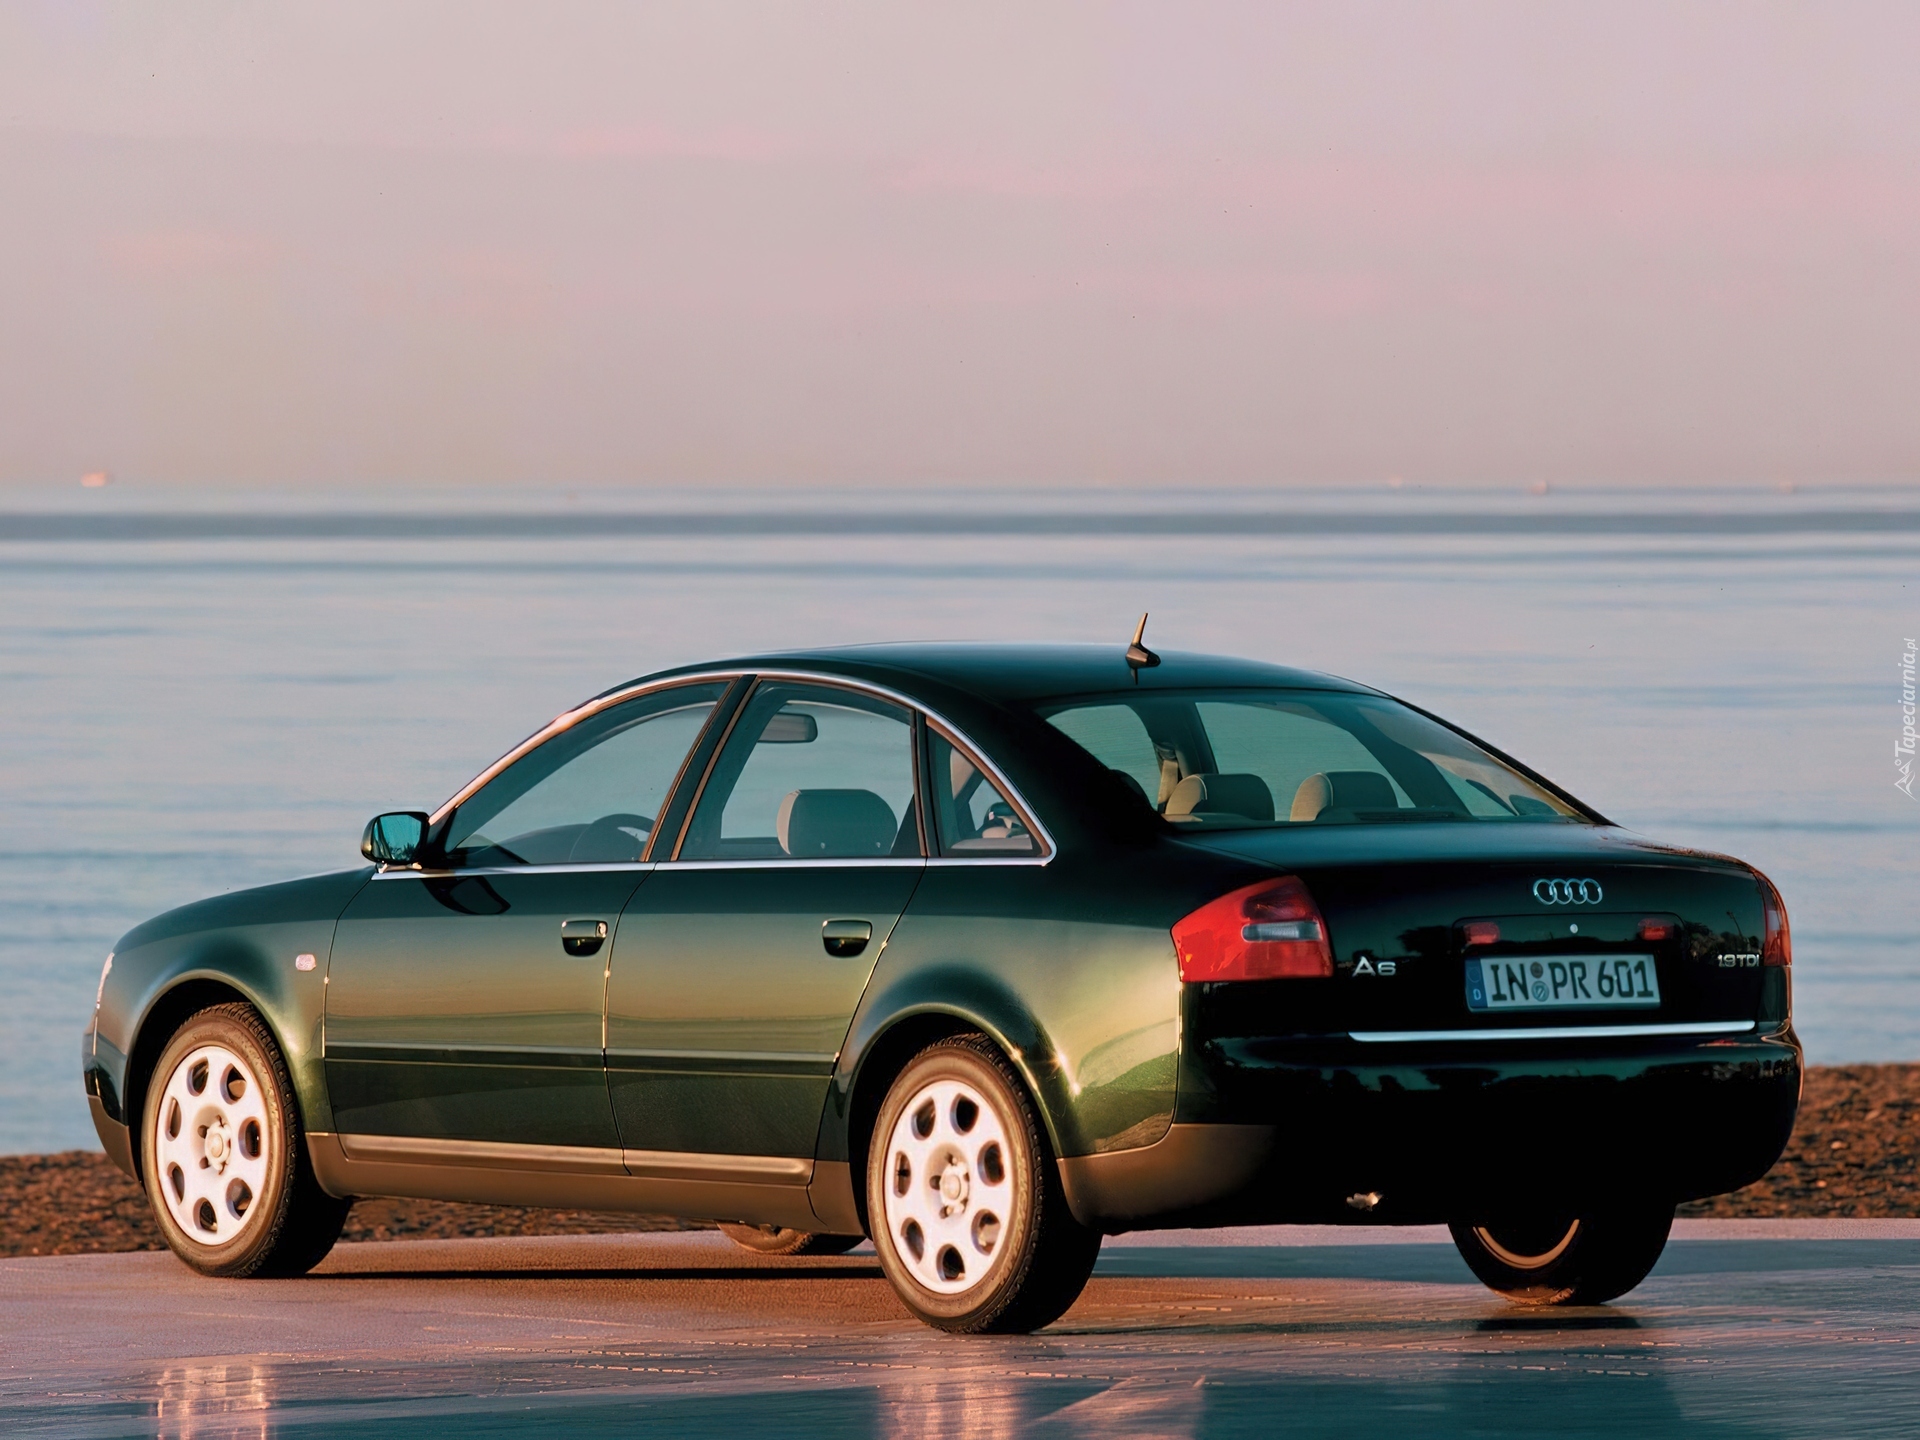 Ауди 4 2001 год. Audi a6 c5 2002. Audi a6 2002 седан. Audi a6 1997. Audi a6 c5 1997.